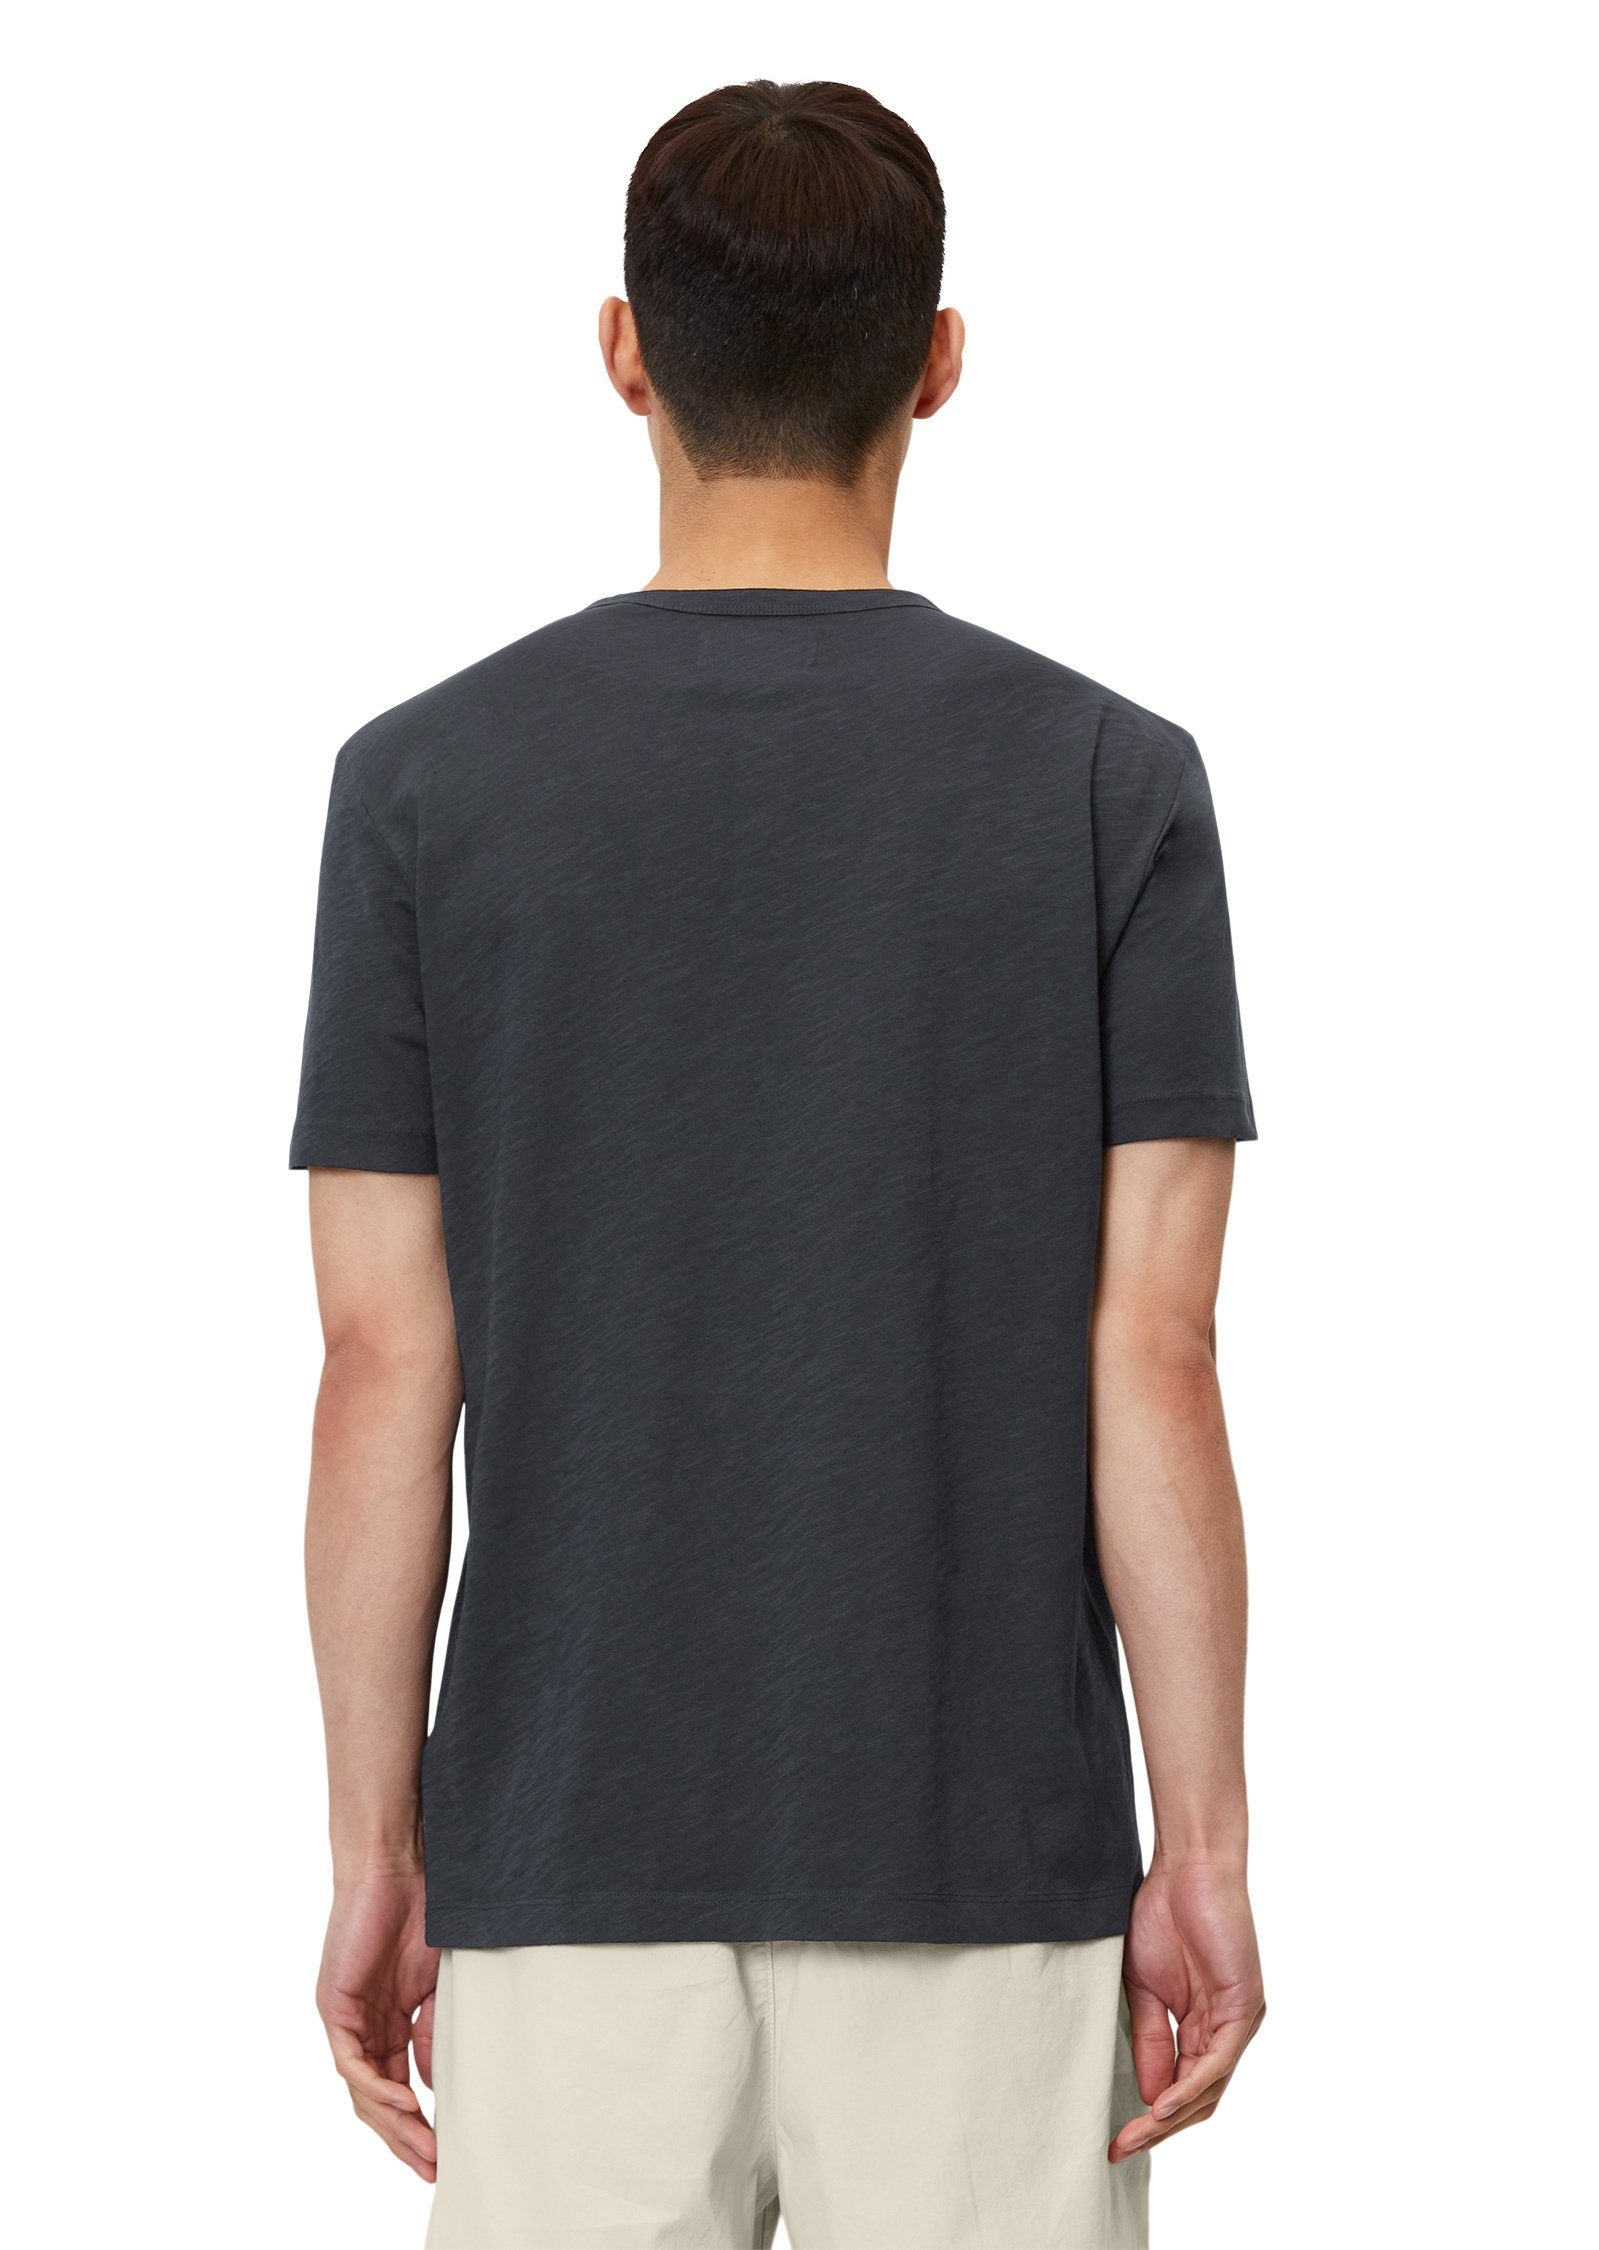 Marc O'Polo in T-Shirt Slub-Jersey-Qualität softer dunkelblau